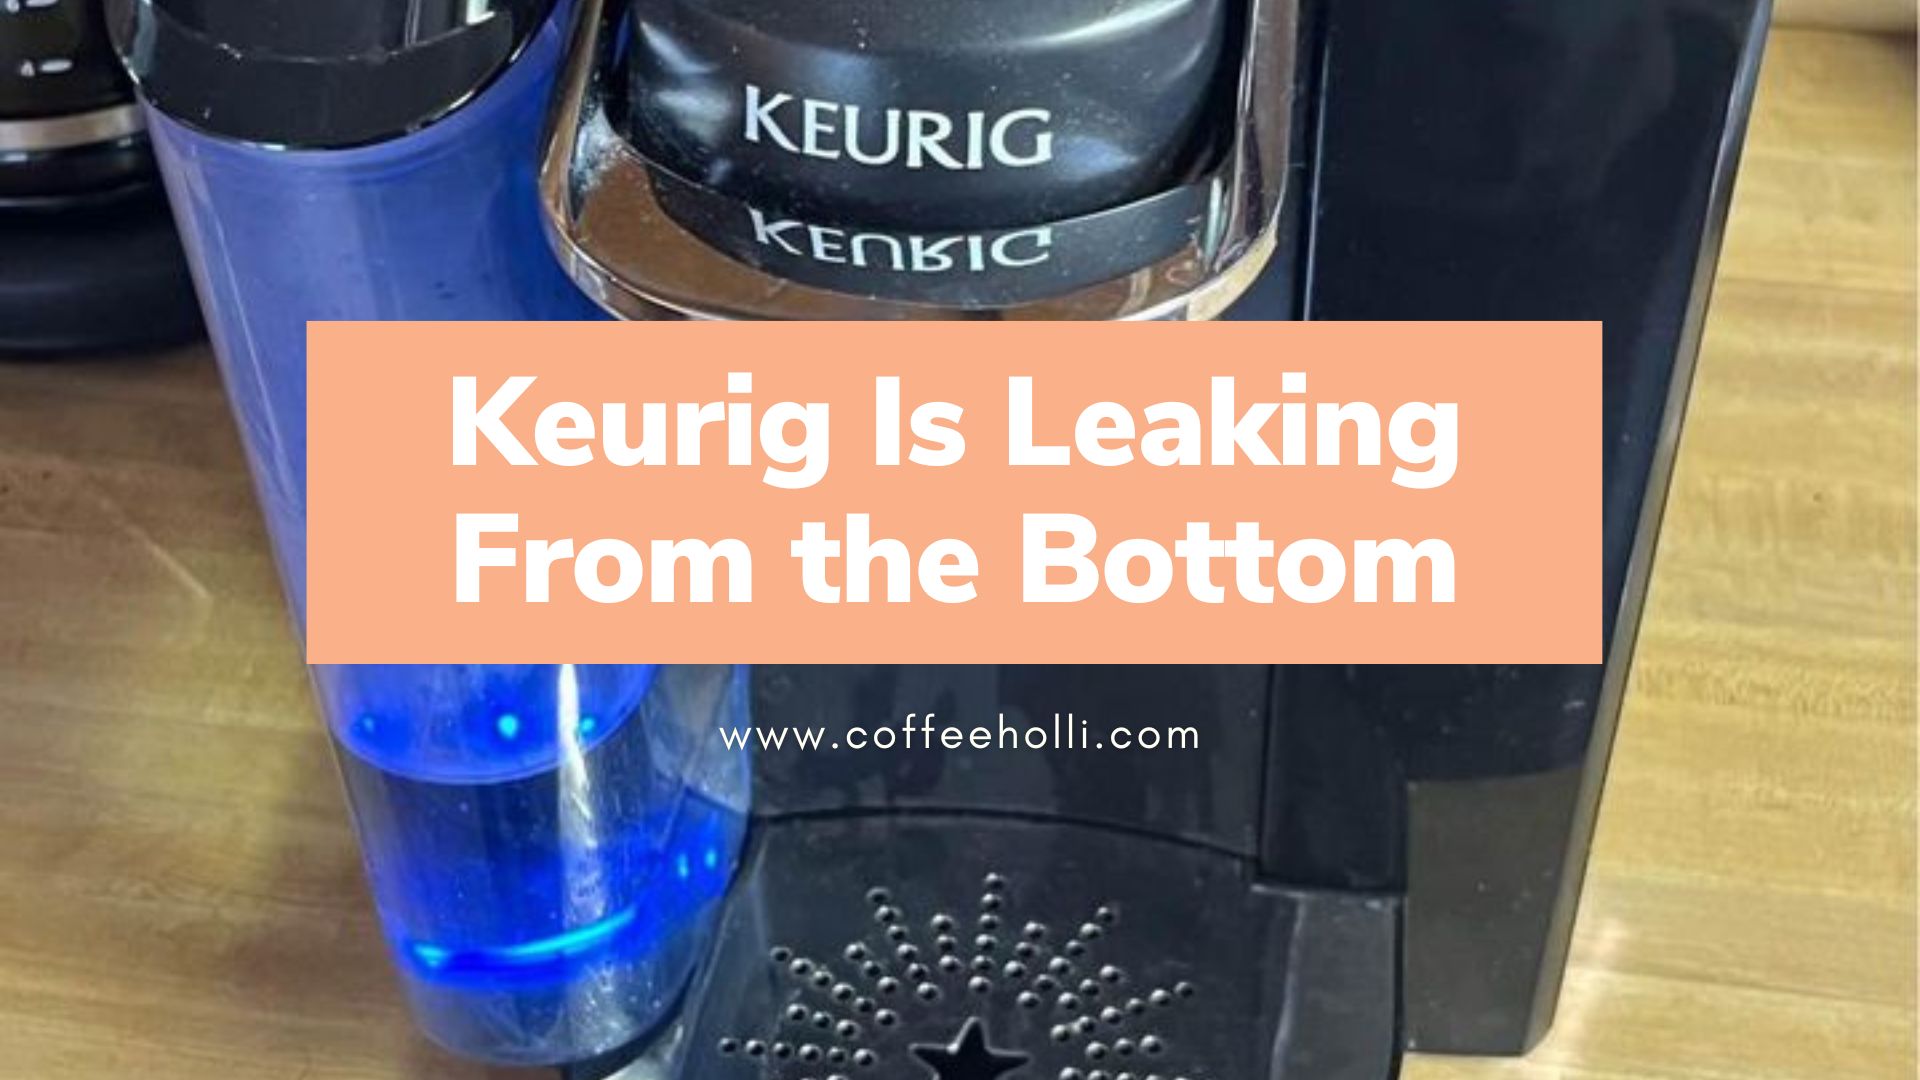 Keurig Leaking From the Bottom